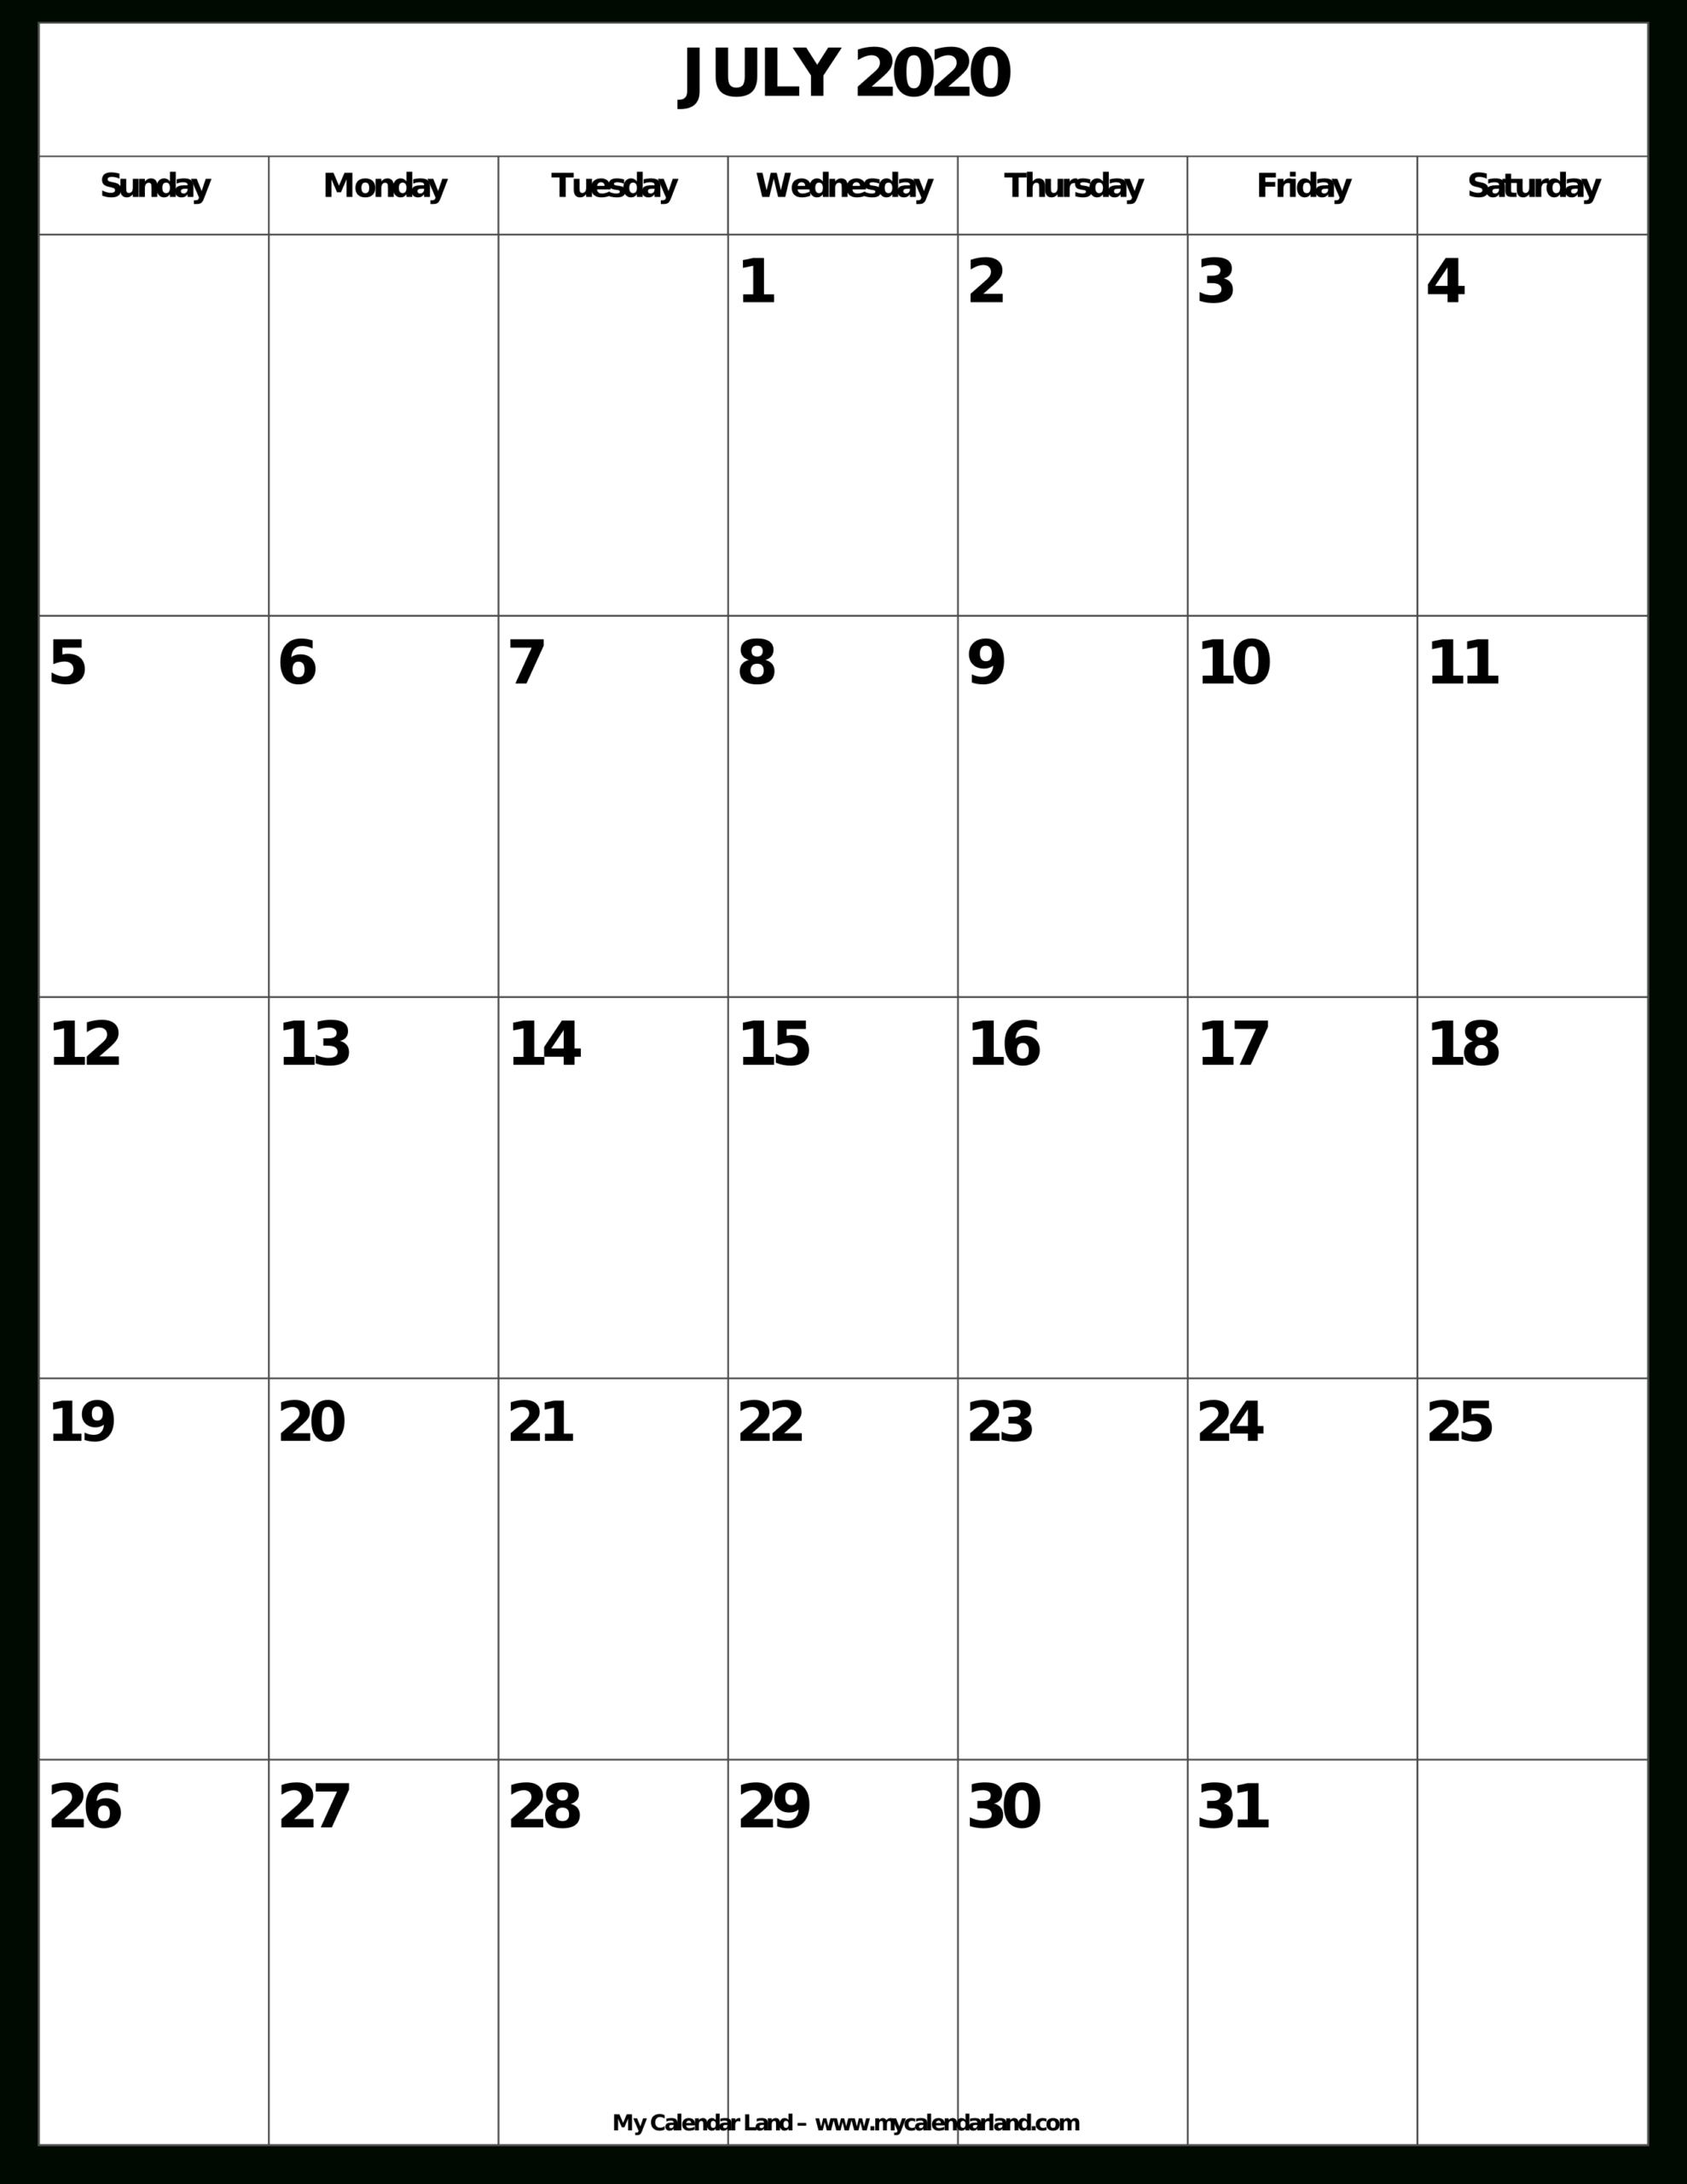 July 2021 Calendar - My Calendar Land